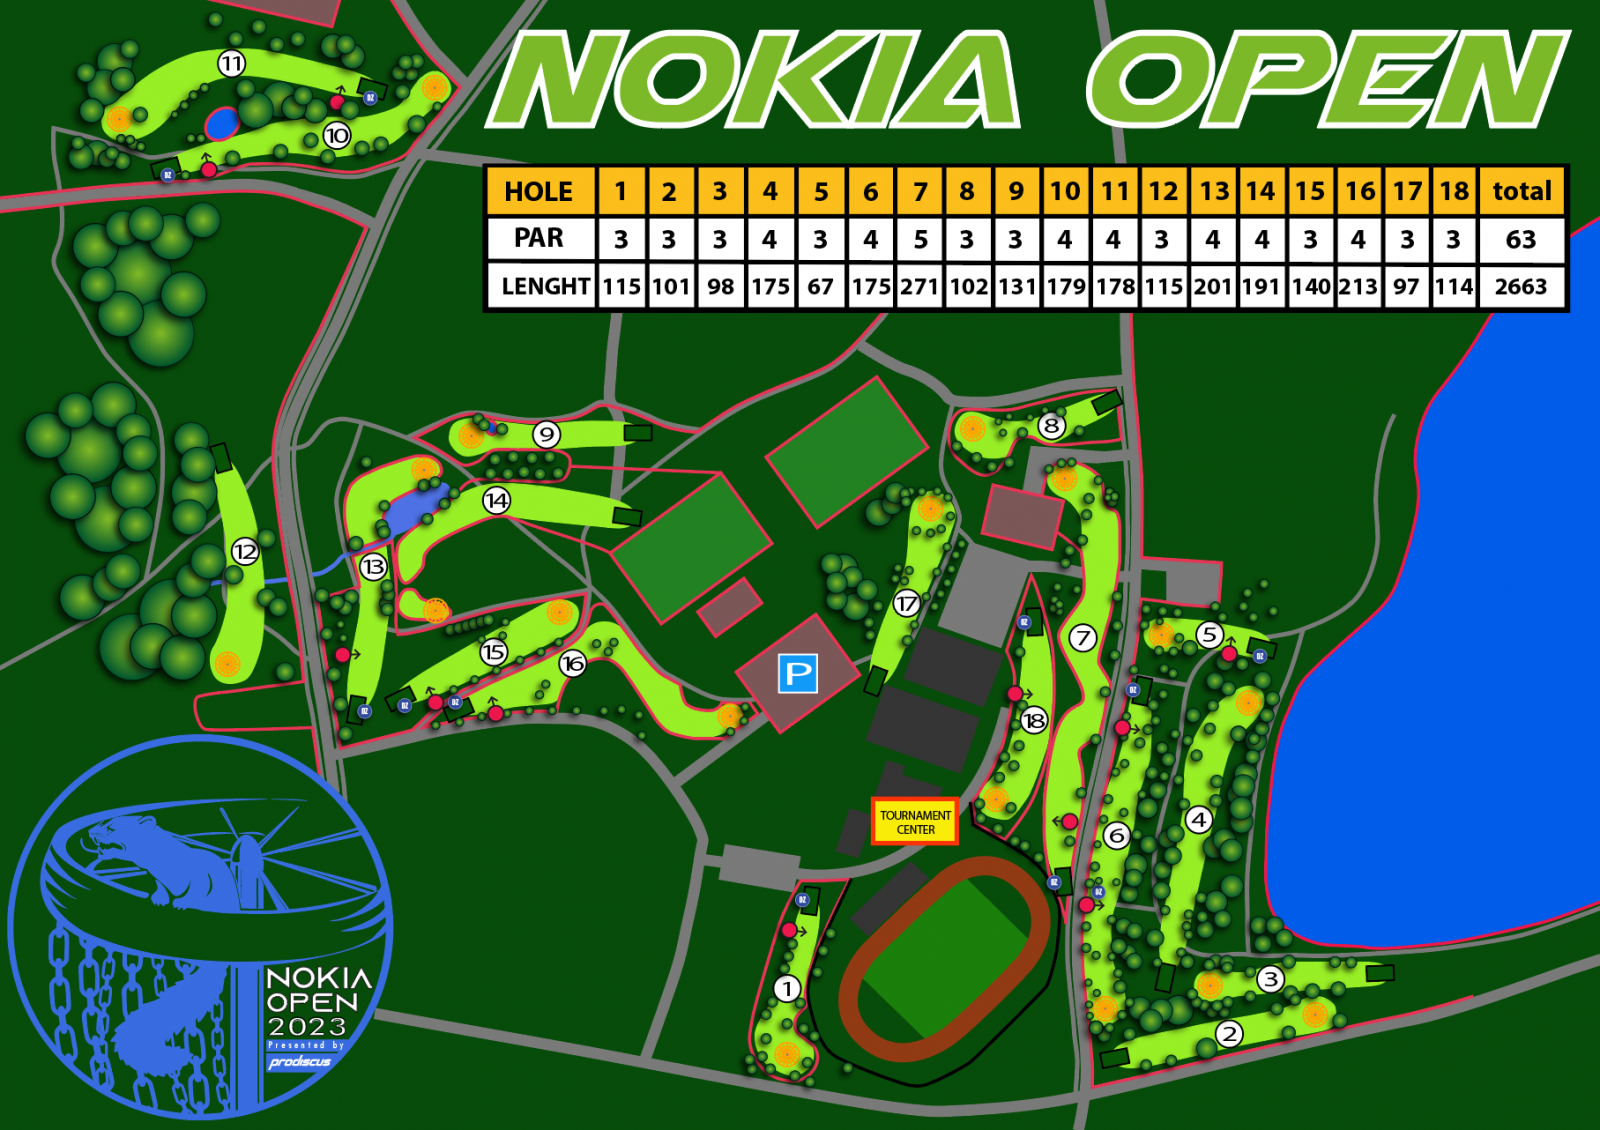 Nokia Open 2023